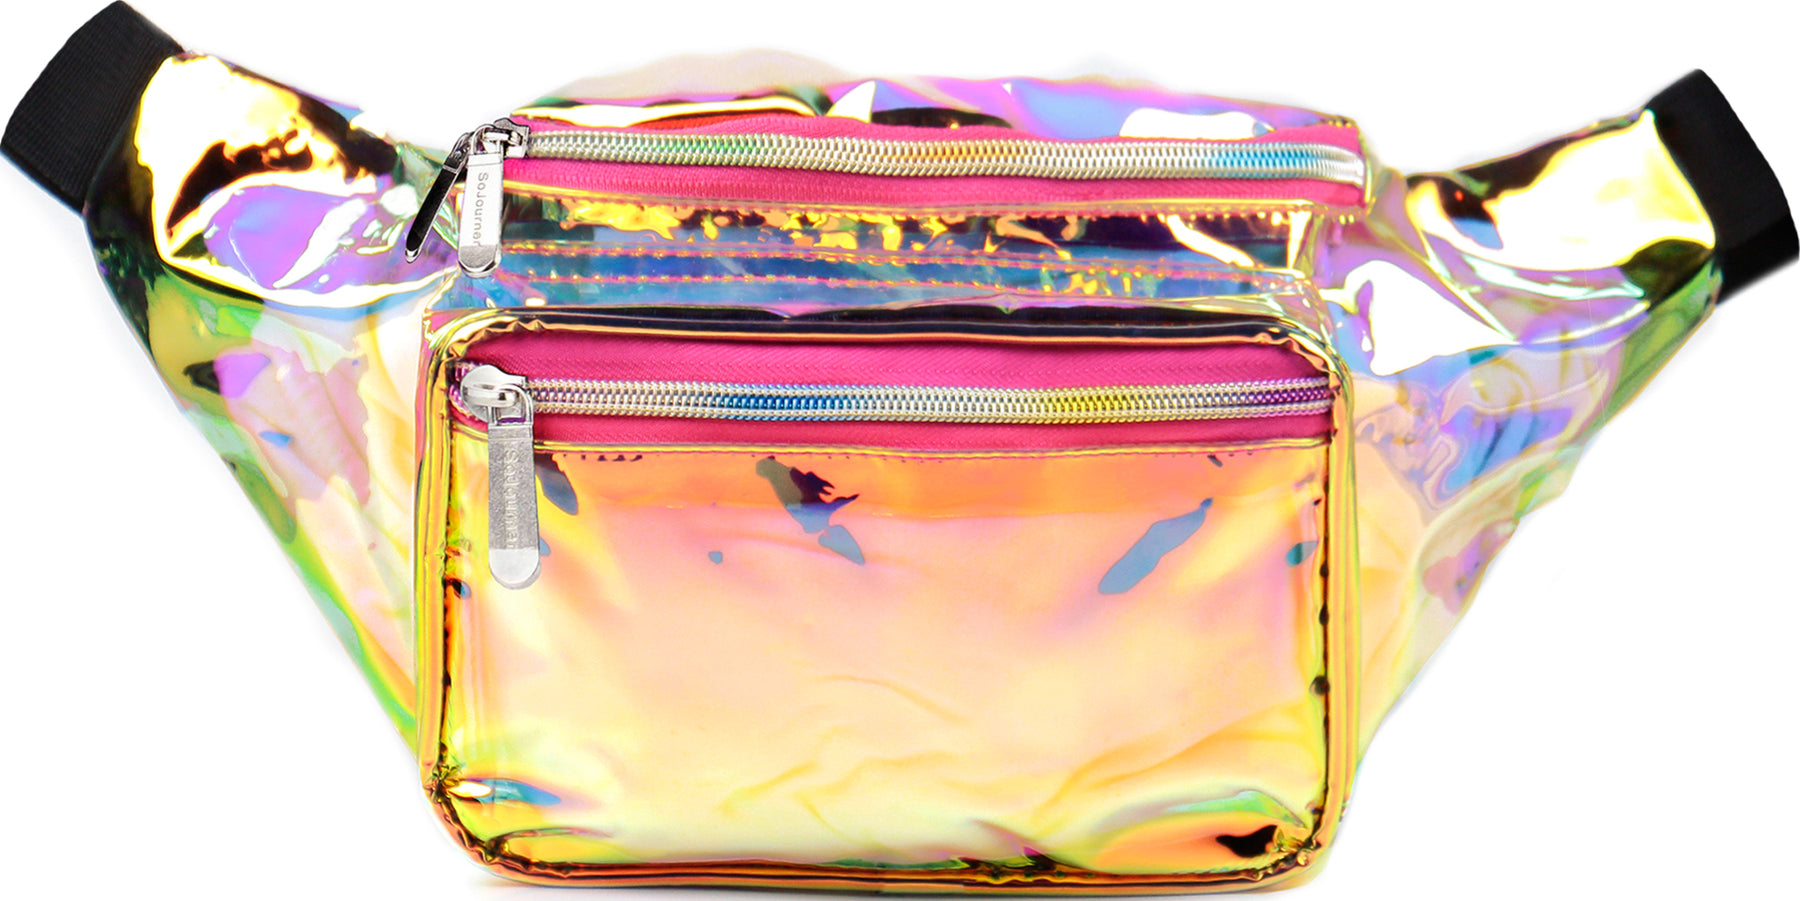 Fanny Pack Transparent Pink & Gold Fanny Pack - SoJourner Bags